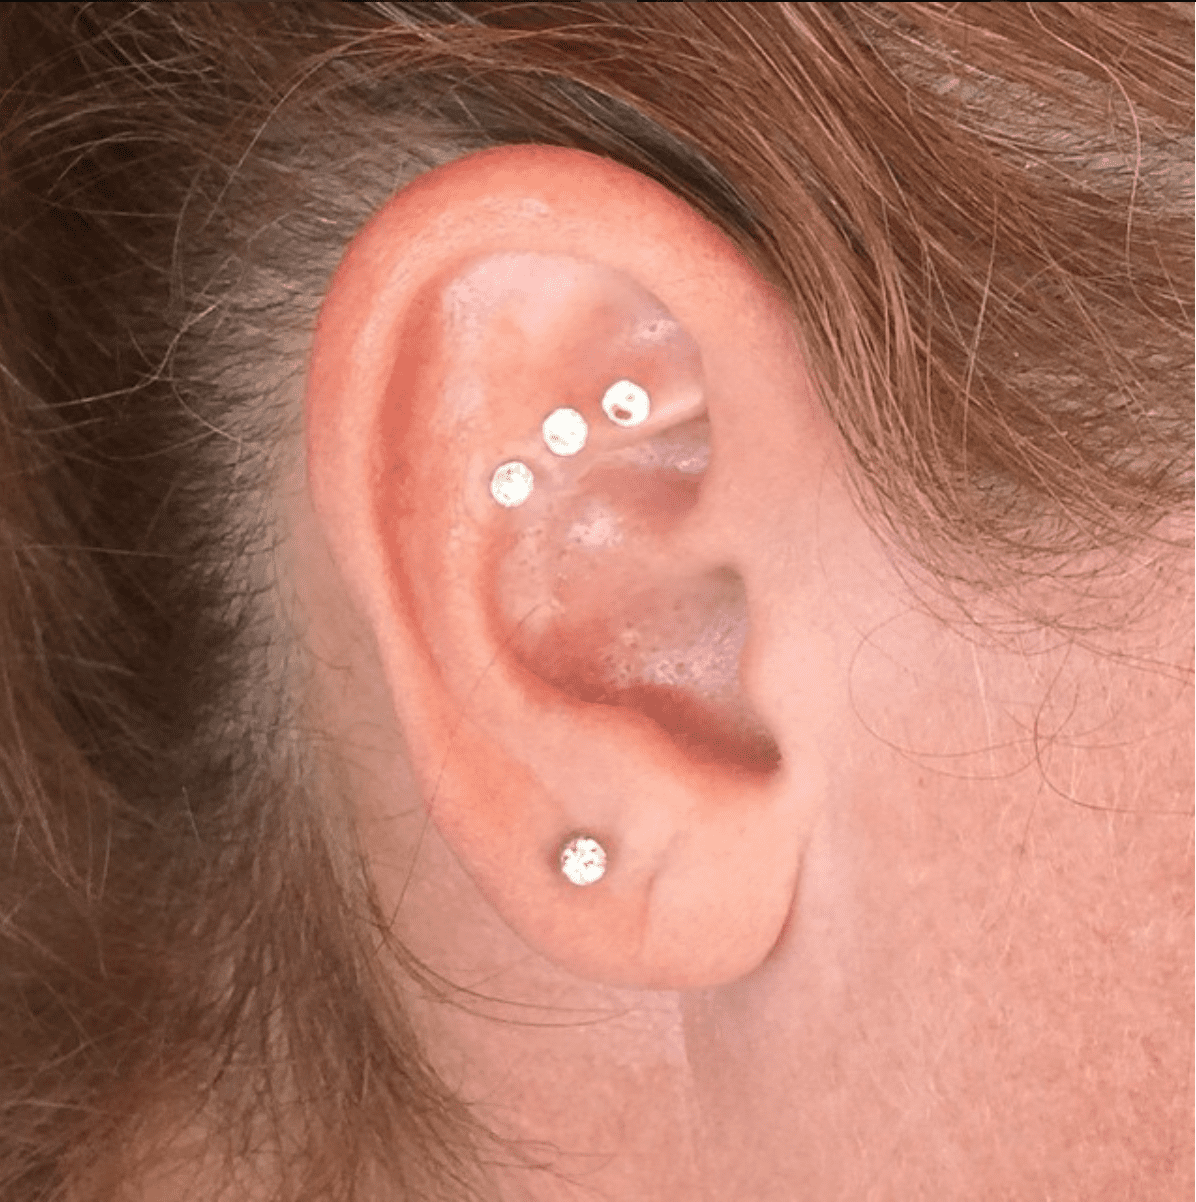 Swarovski Crystal ear seeds on client ear using auricular therapy